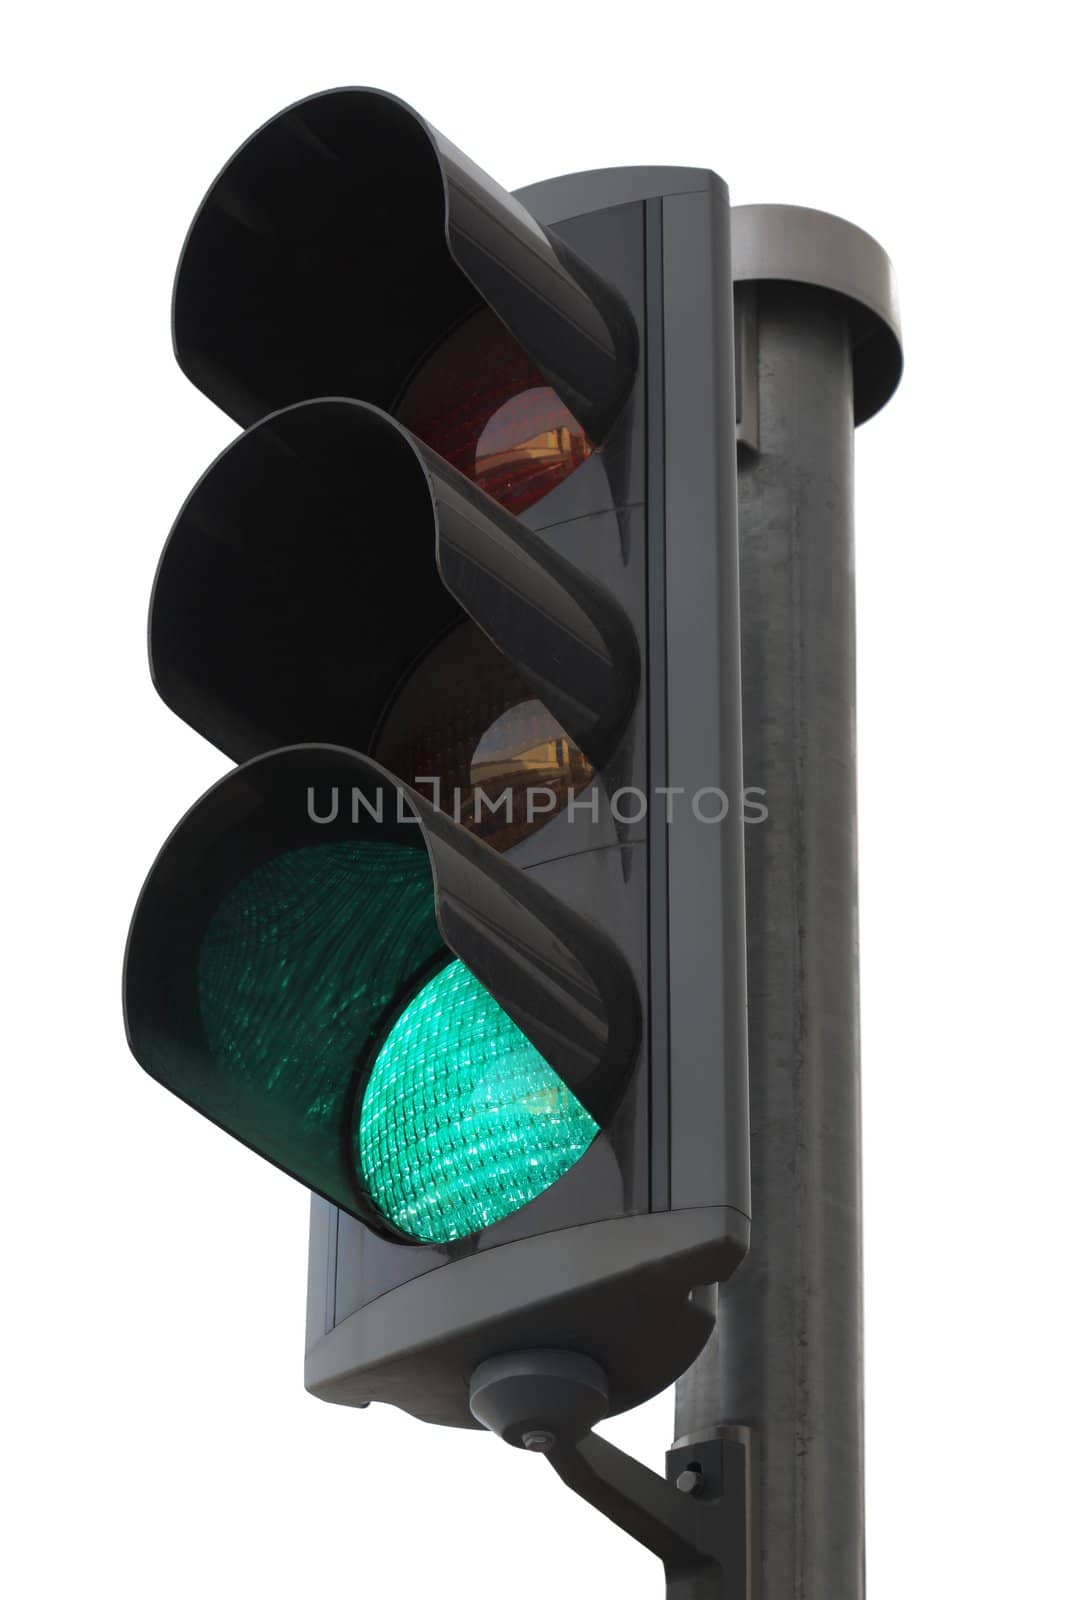 Green light by Stocksnapper